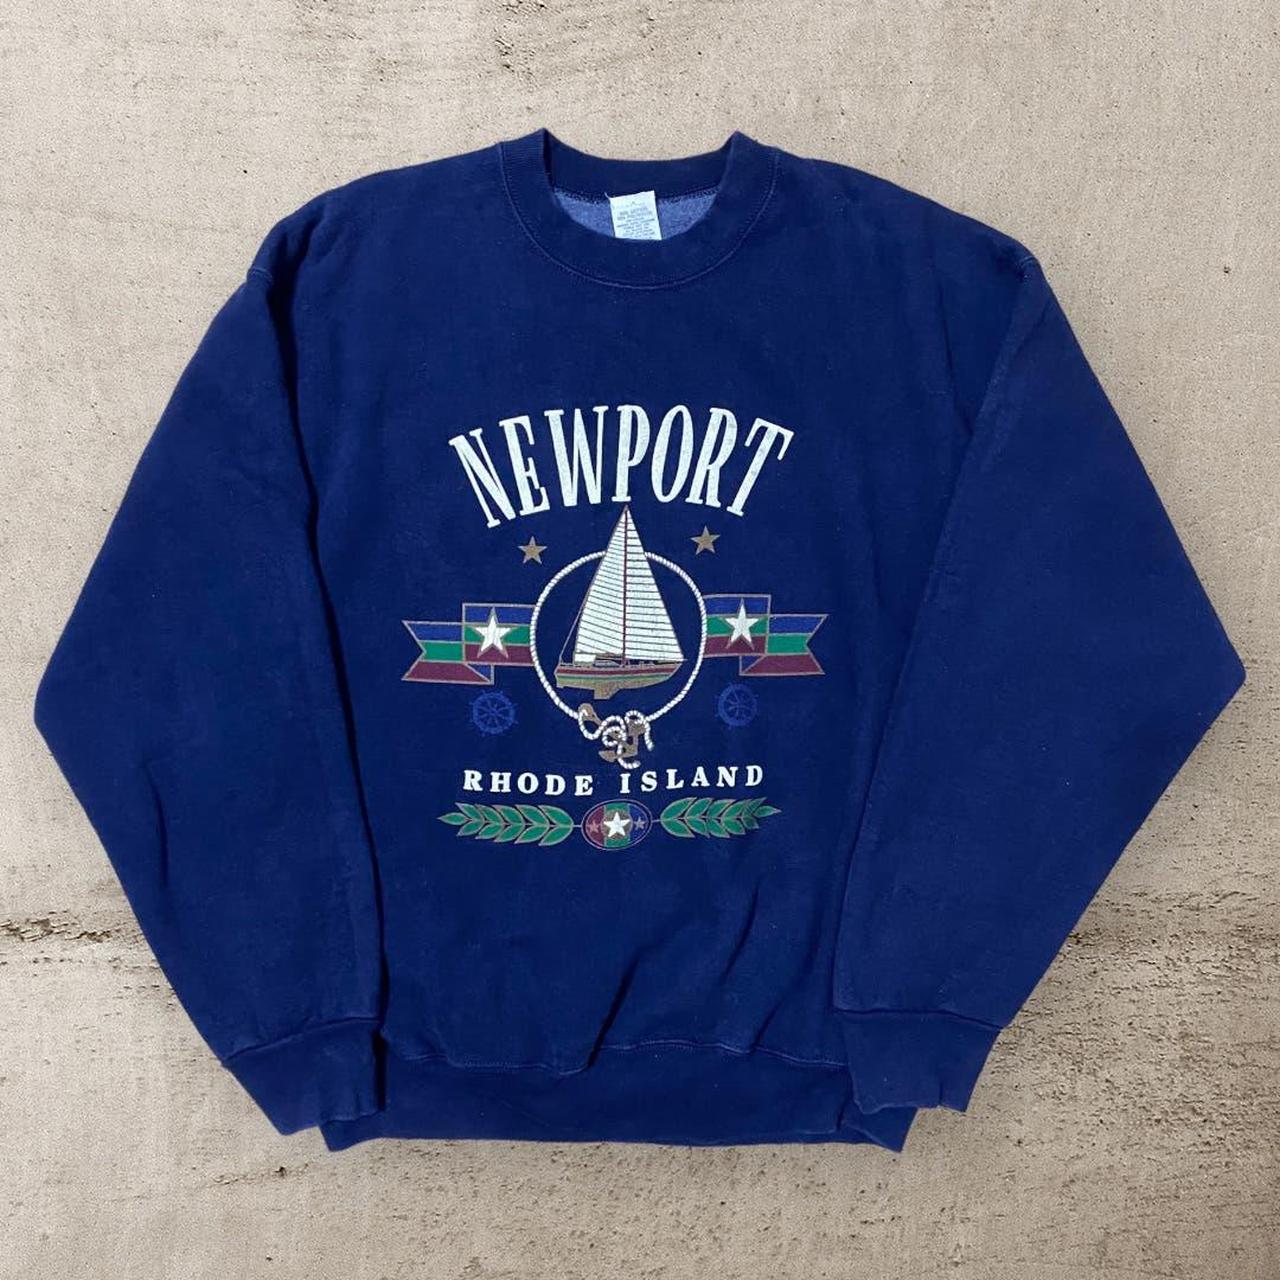 Vintage Newport Rhode Island Crewneck Used but in... - Depop